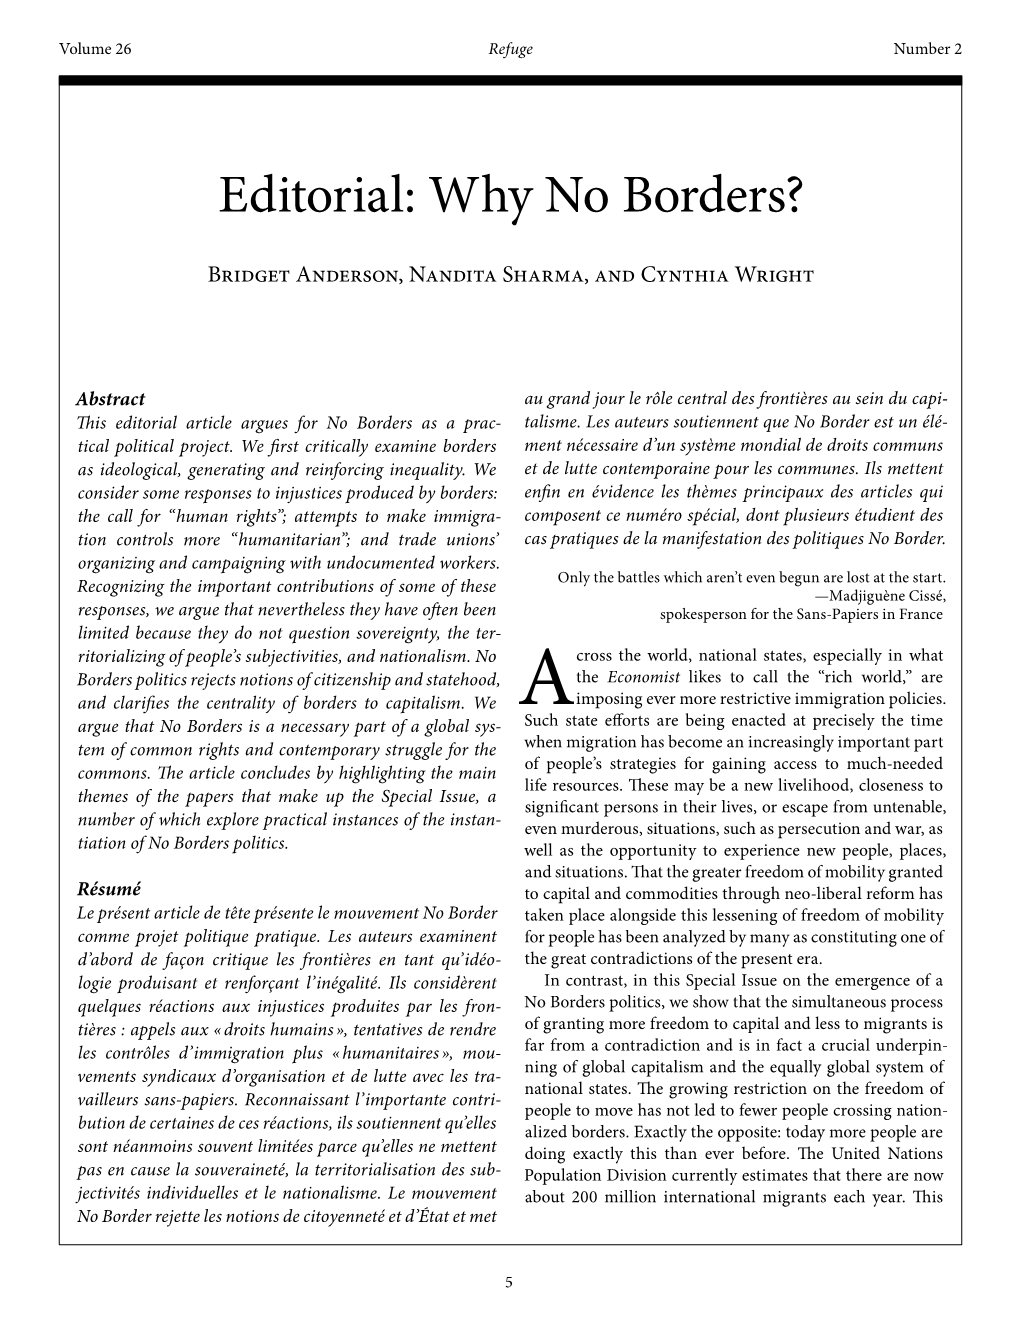 Editorial: Why No Borders?